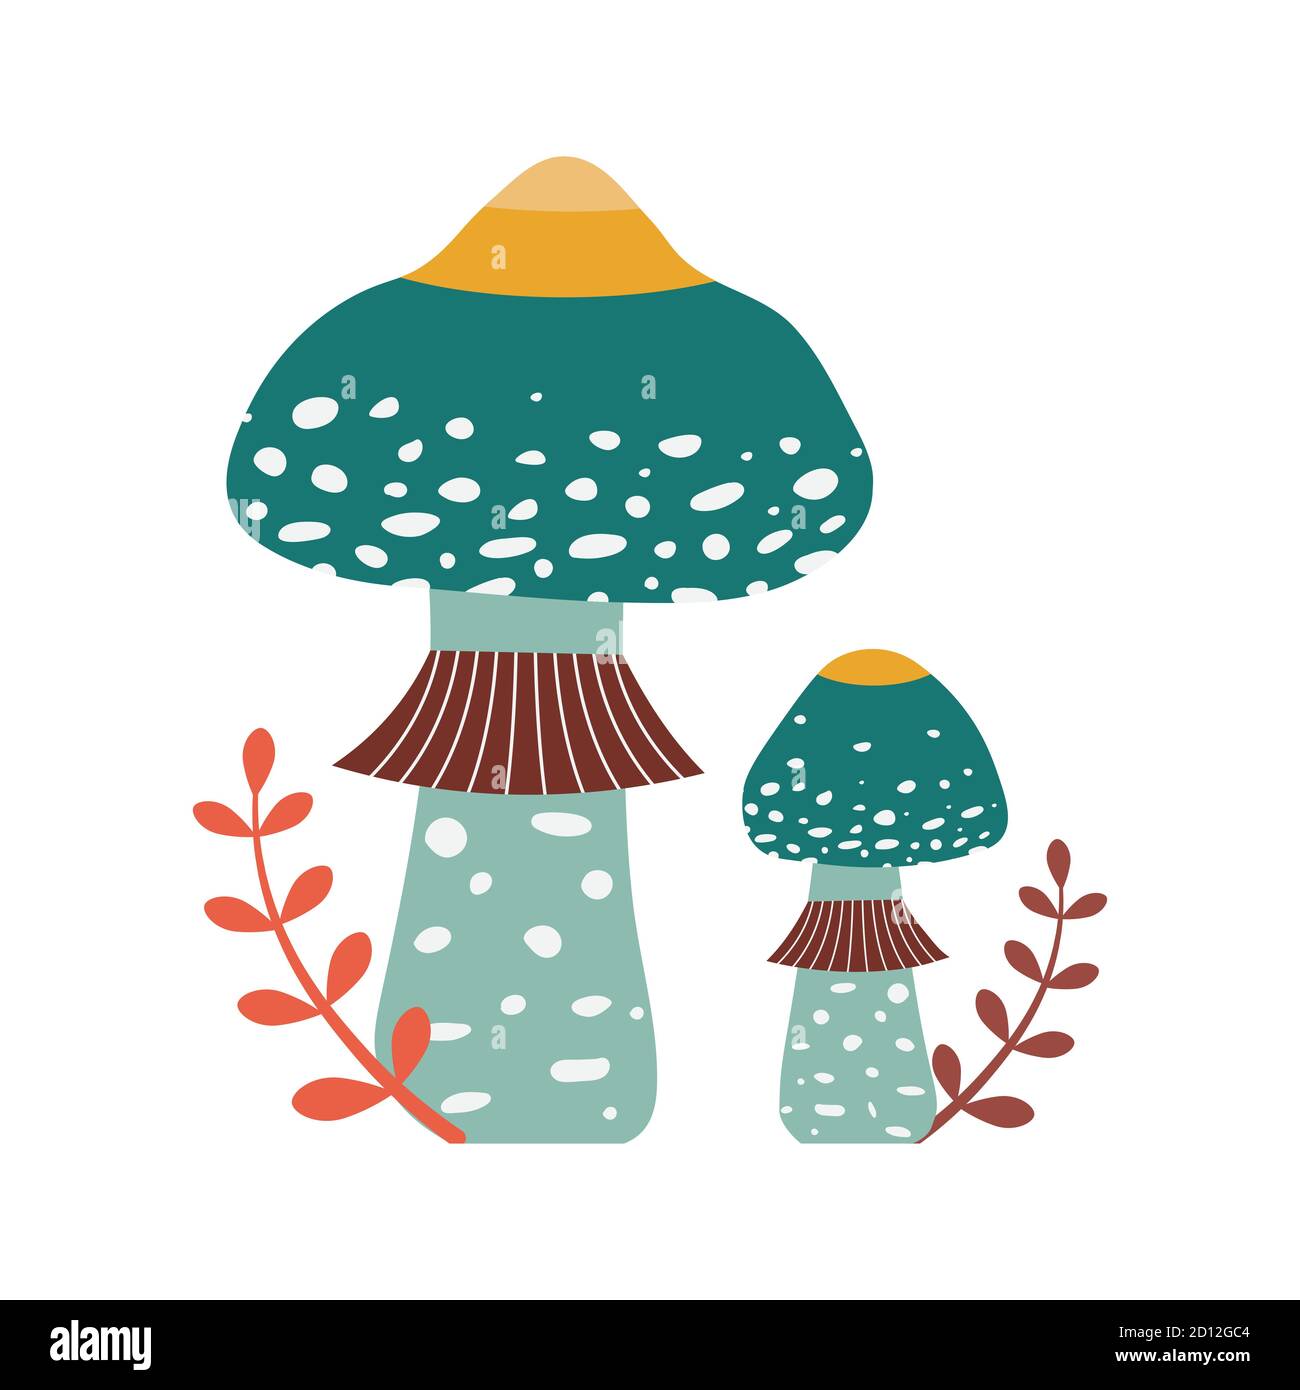 Forest Mushroom Indigo Milk Cap in Cartoon Stock Vector